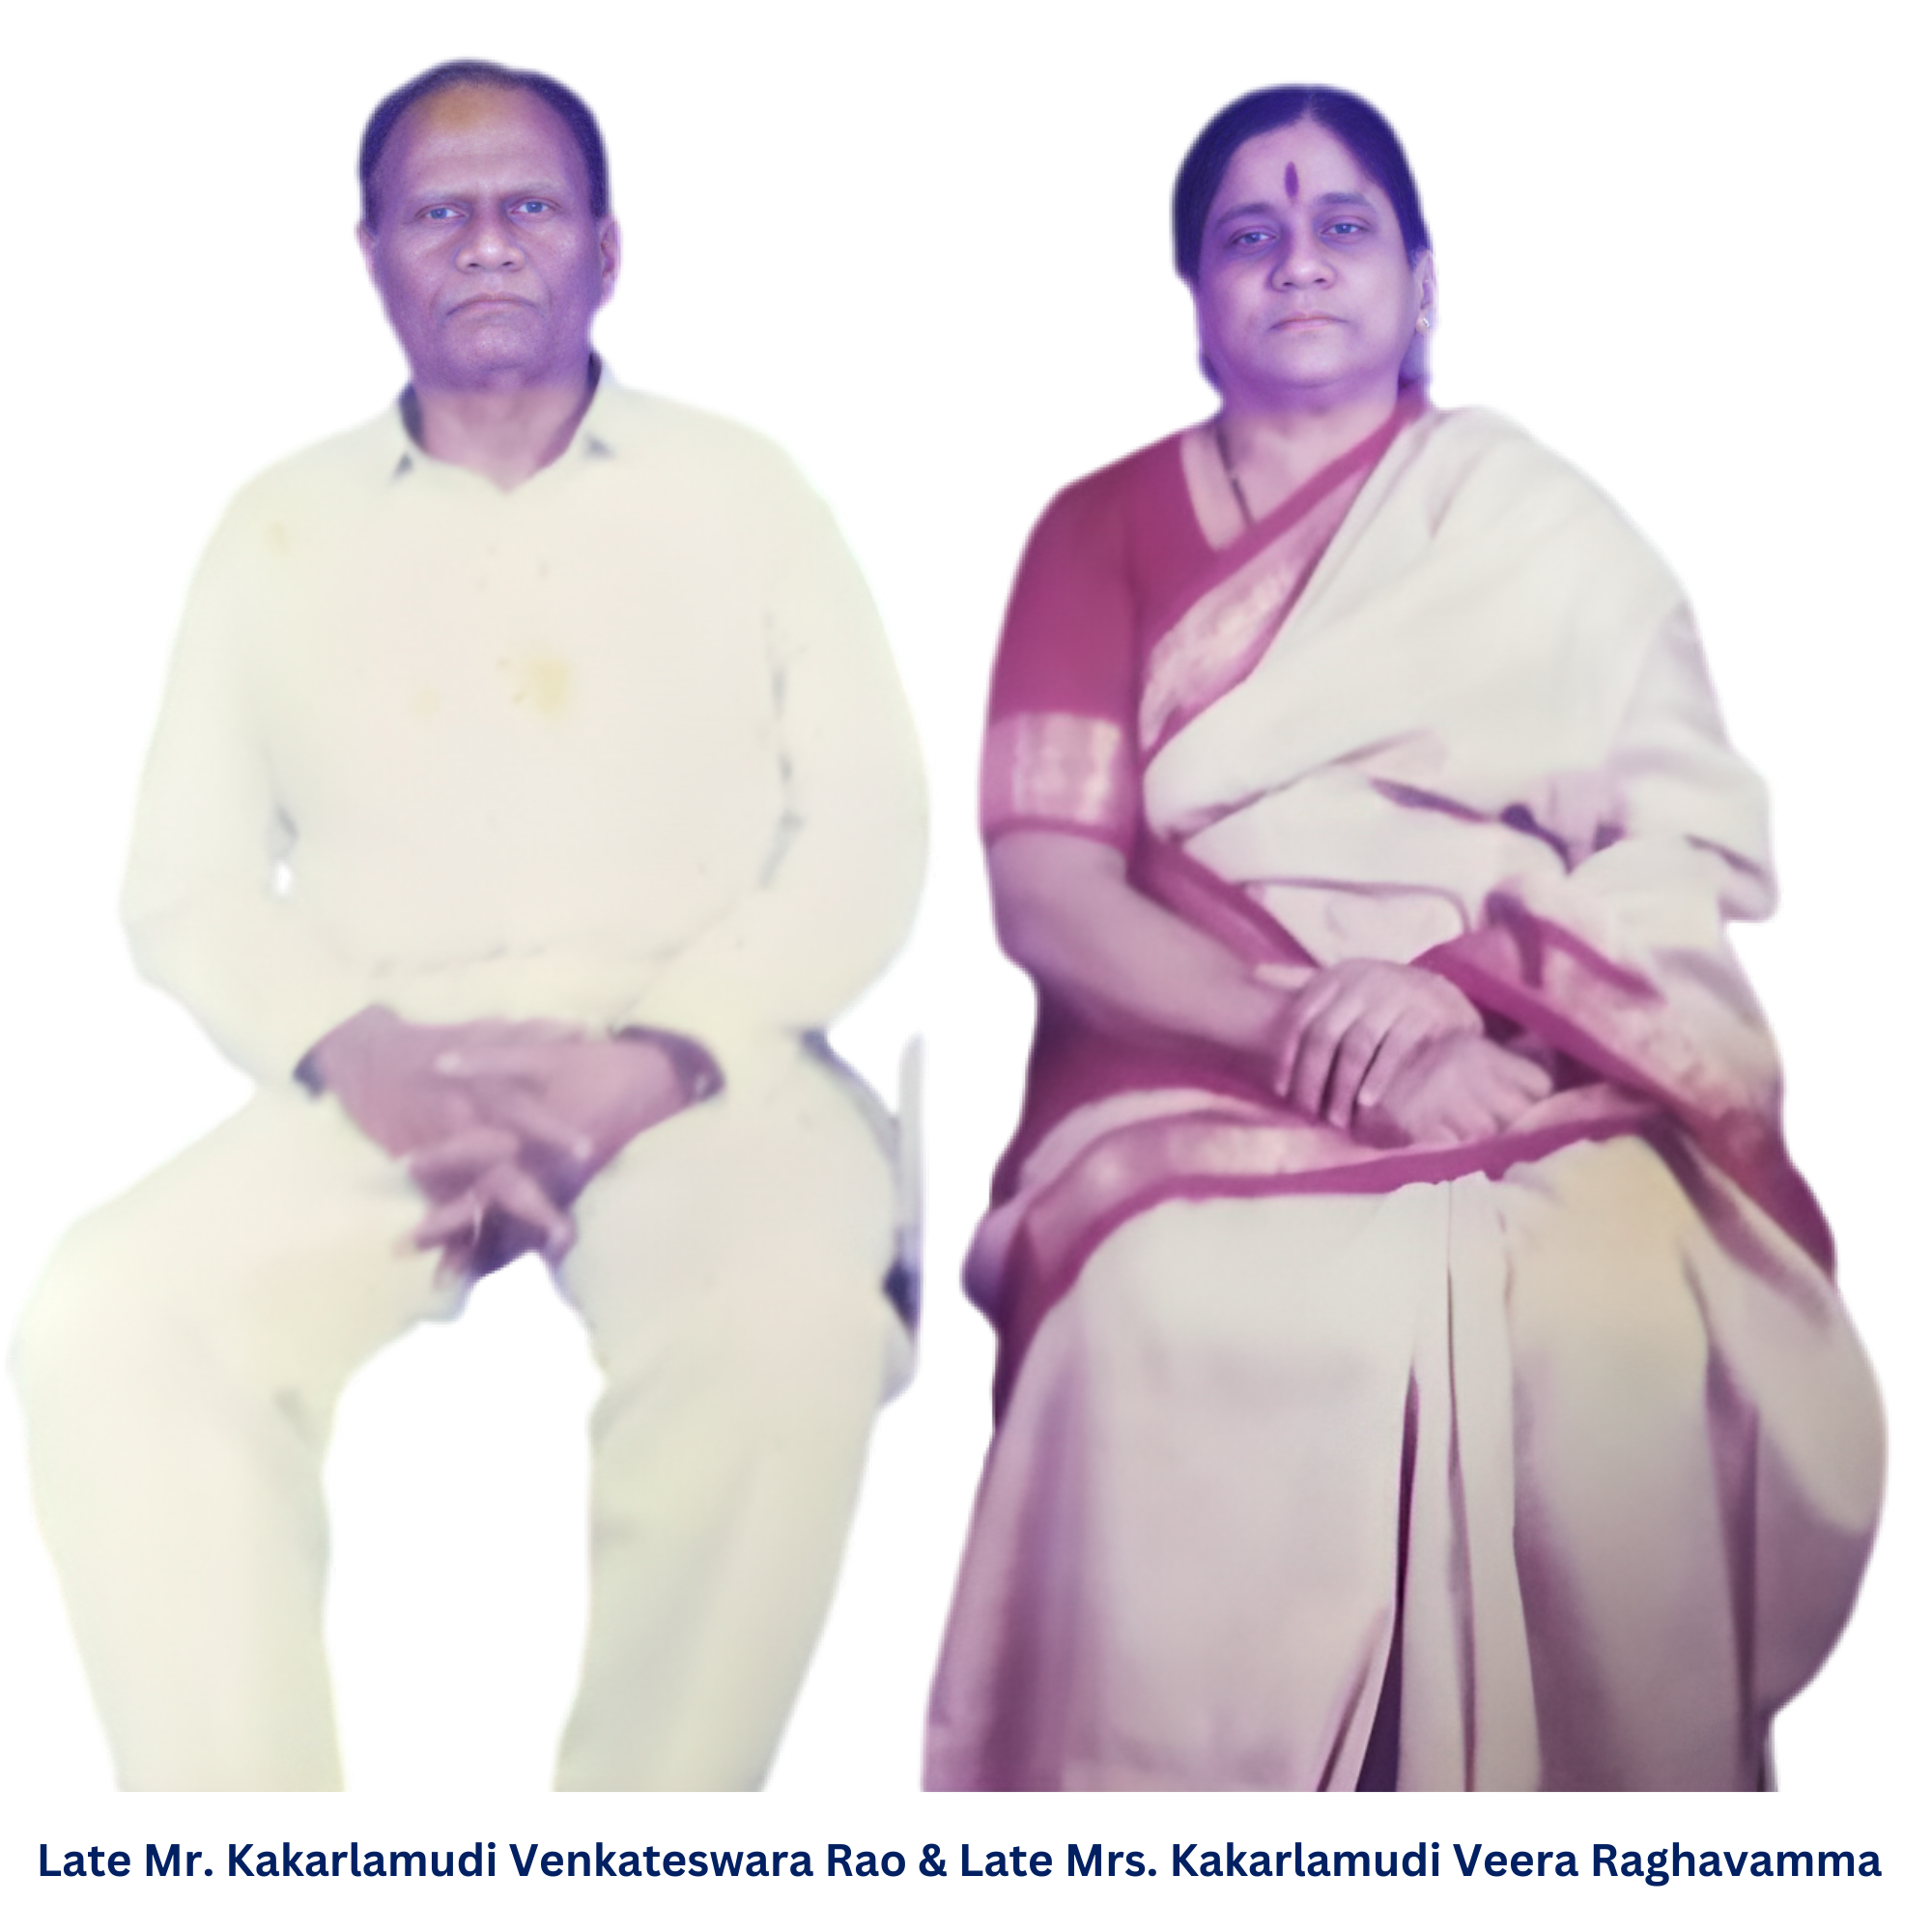 Mr. Kakarlamudi Venkateswara Rao and Mrs. Kakarlamudi Veera Raghavamma